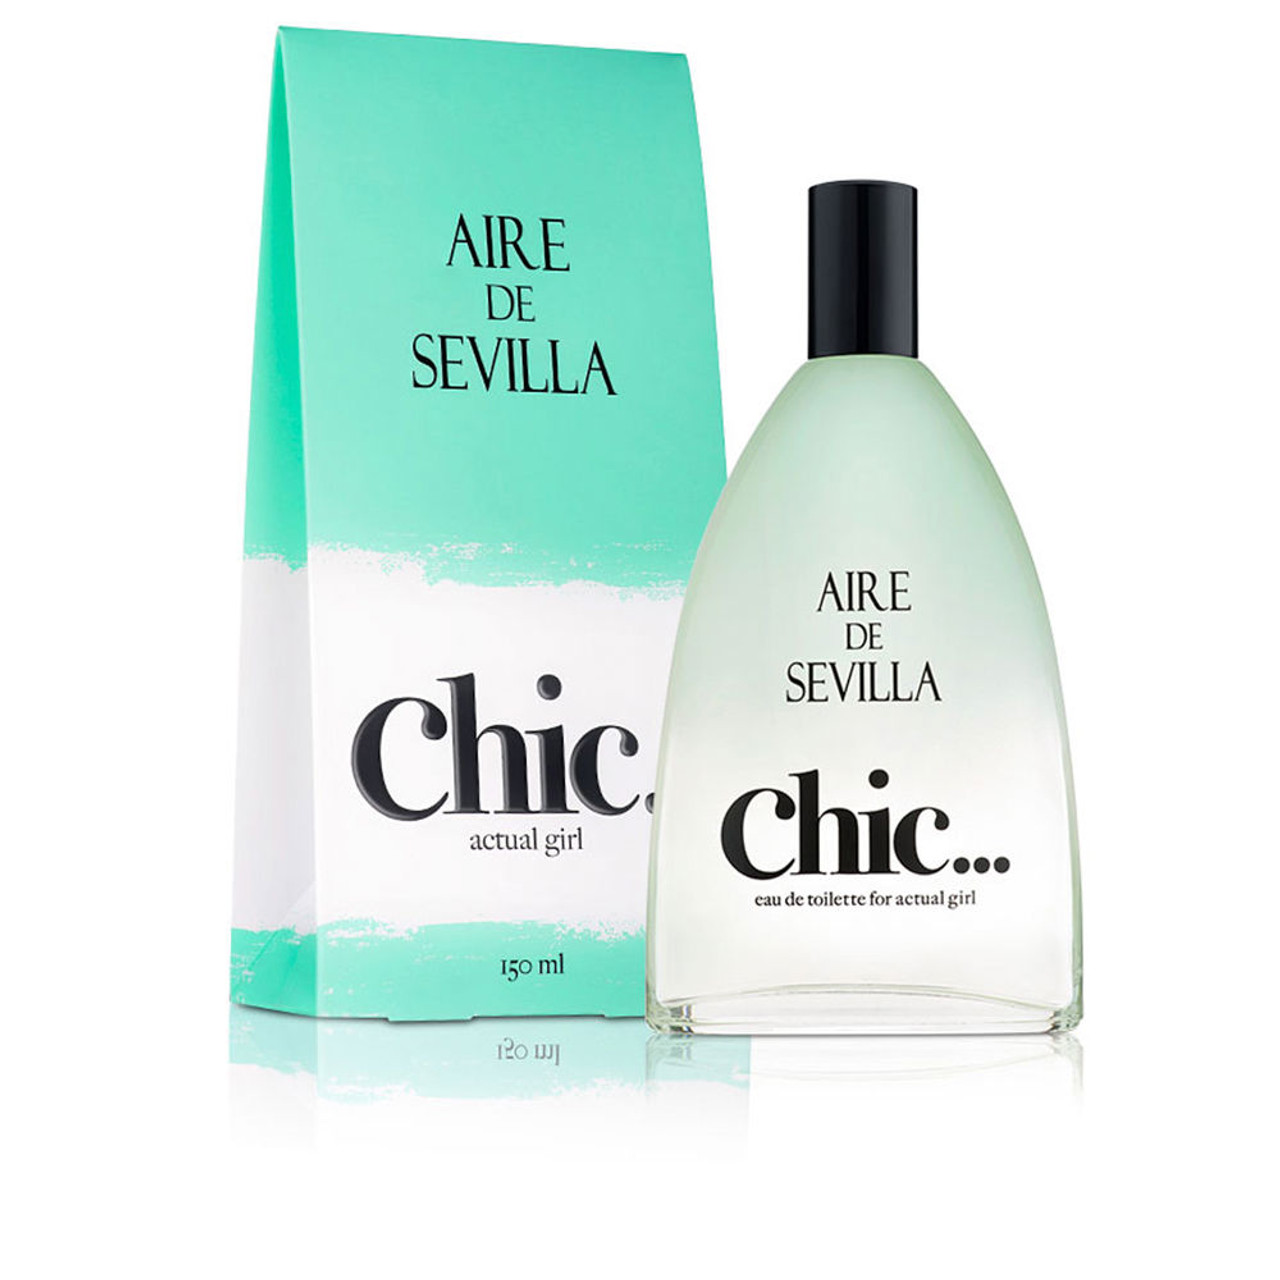 Aire de Sevilla Instituto Español perfume - a fragrance for women